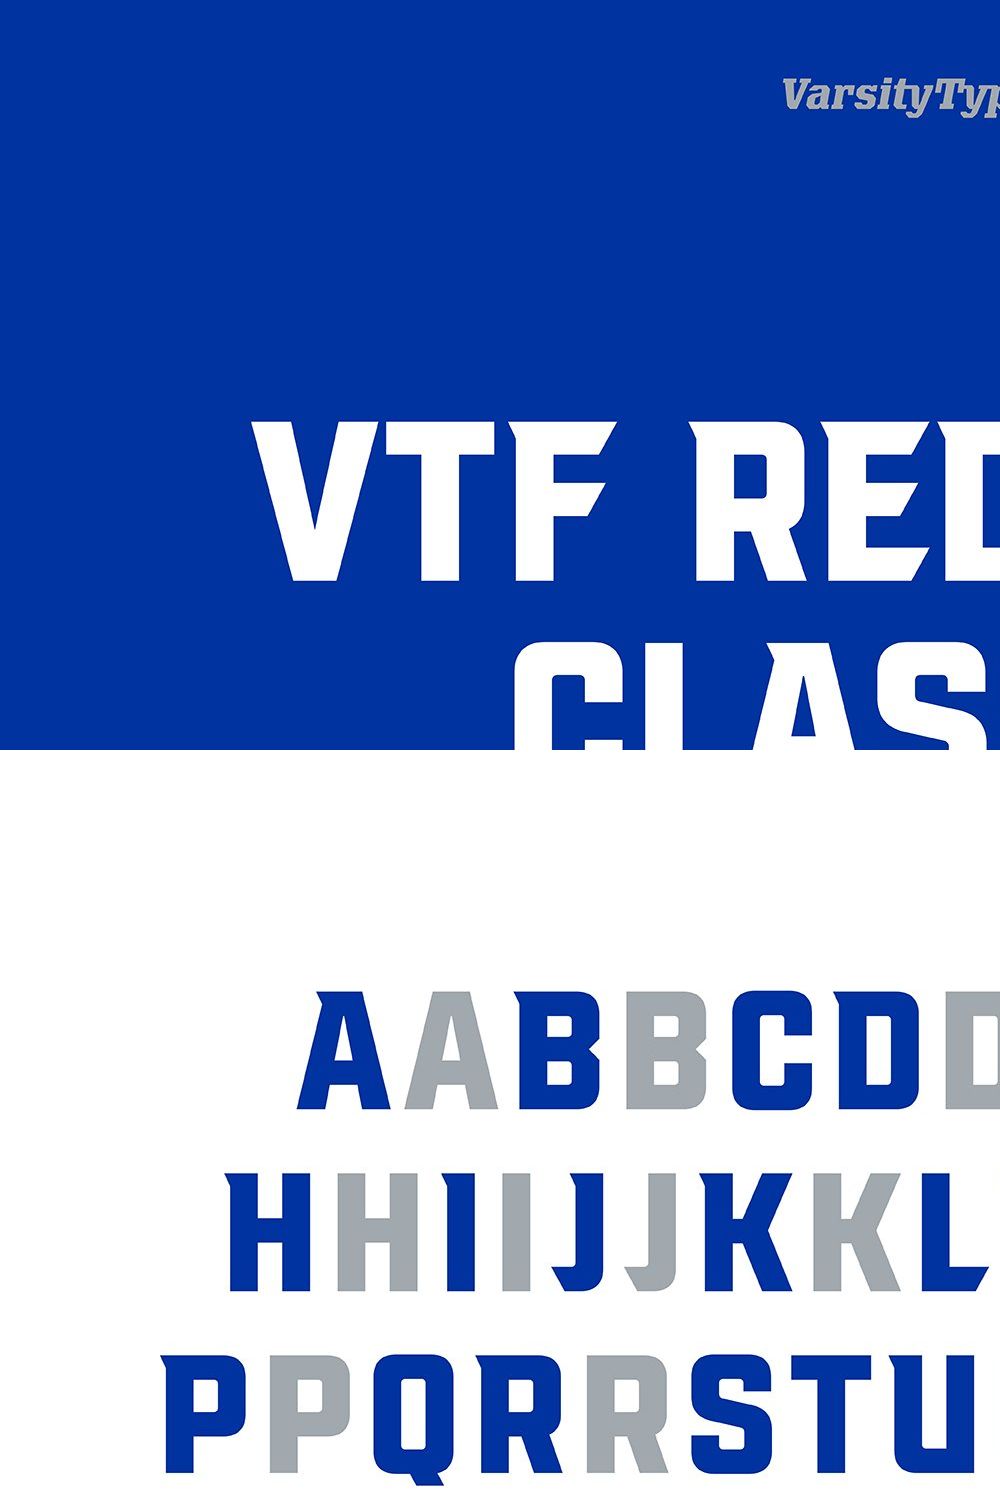 VTF Redzone Classic pinterest preview image.